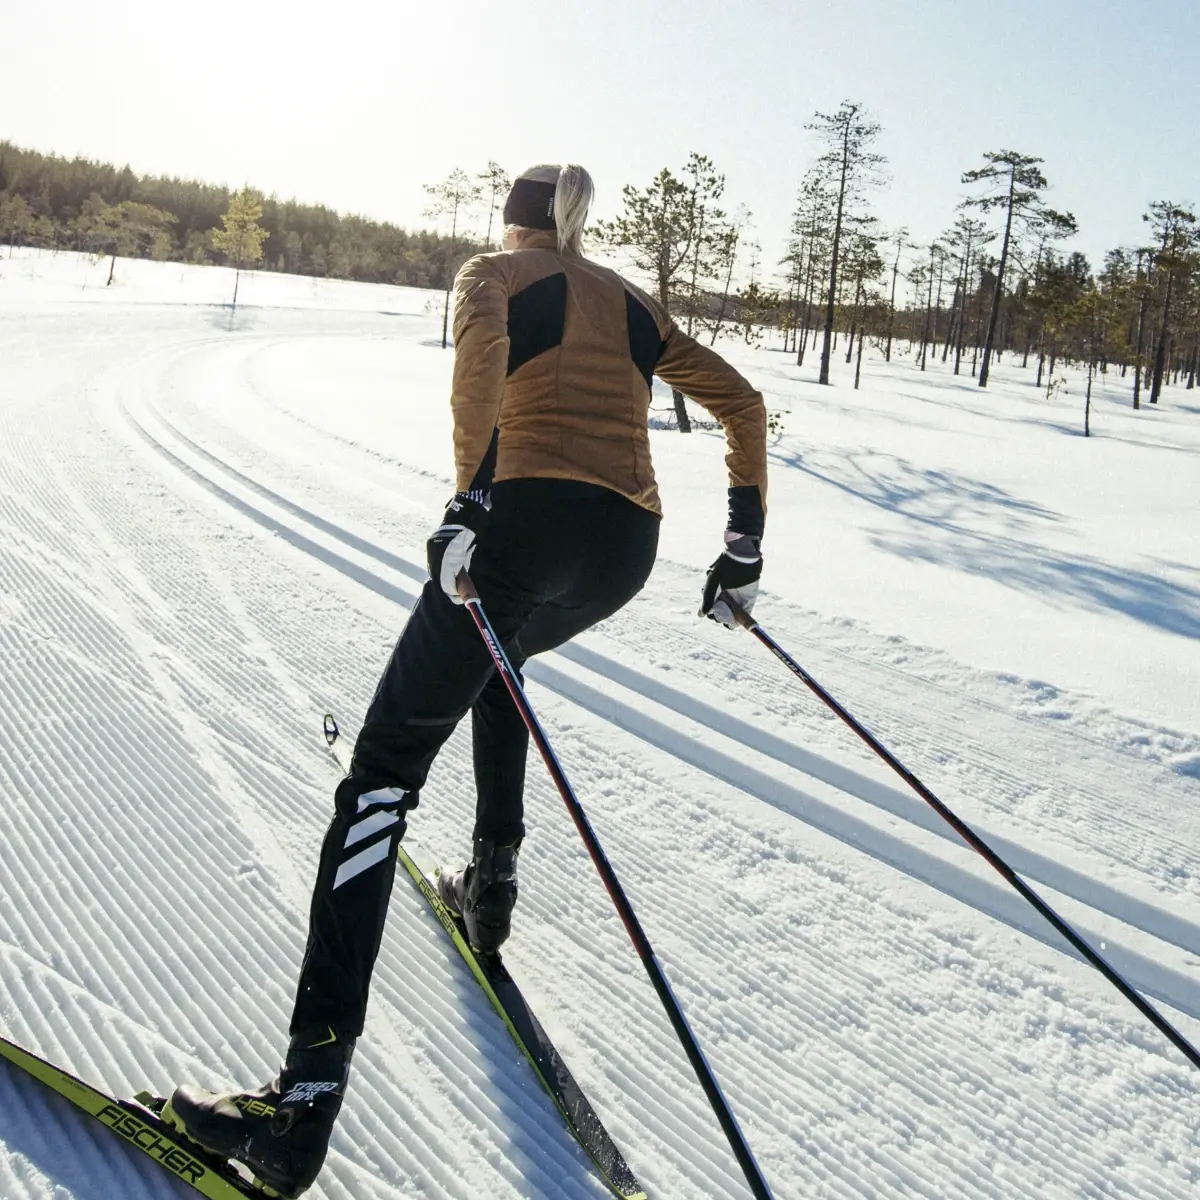 Adidas Terrex Xperior Cross-Country Ski Soft Shell Pants. 3